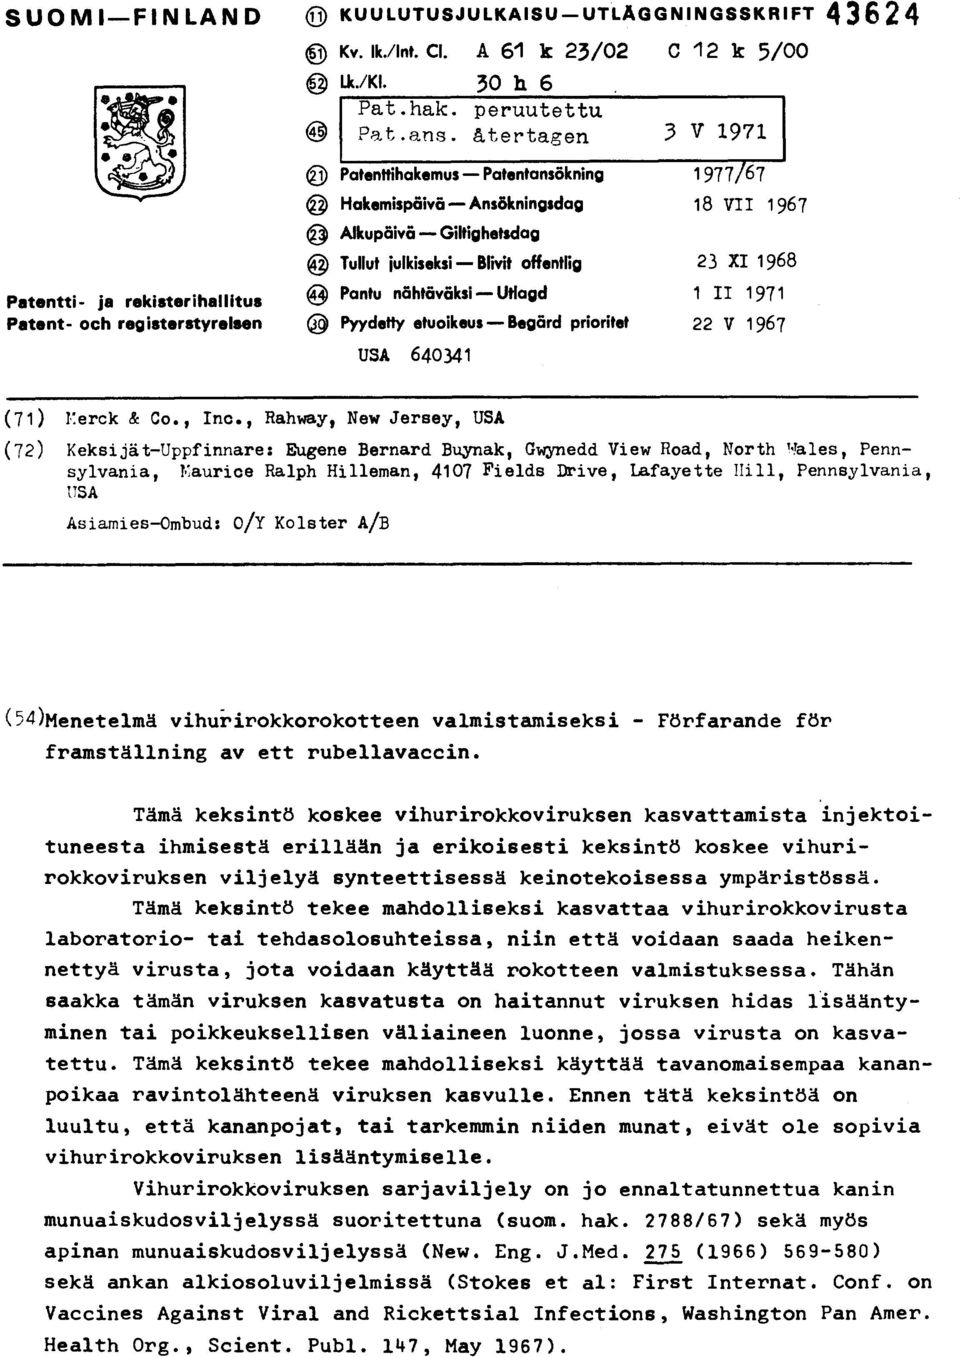 1971 Patentti- ja rekisterihallitus Patent- och registerstyrelsen @ Pyydetty etuoikeus Begärd prioritet 22 V 1967 USA 640341 (71) 1:erck & Co., Inc.